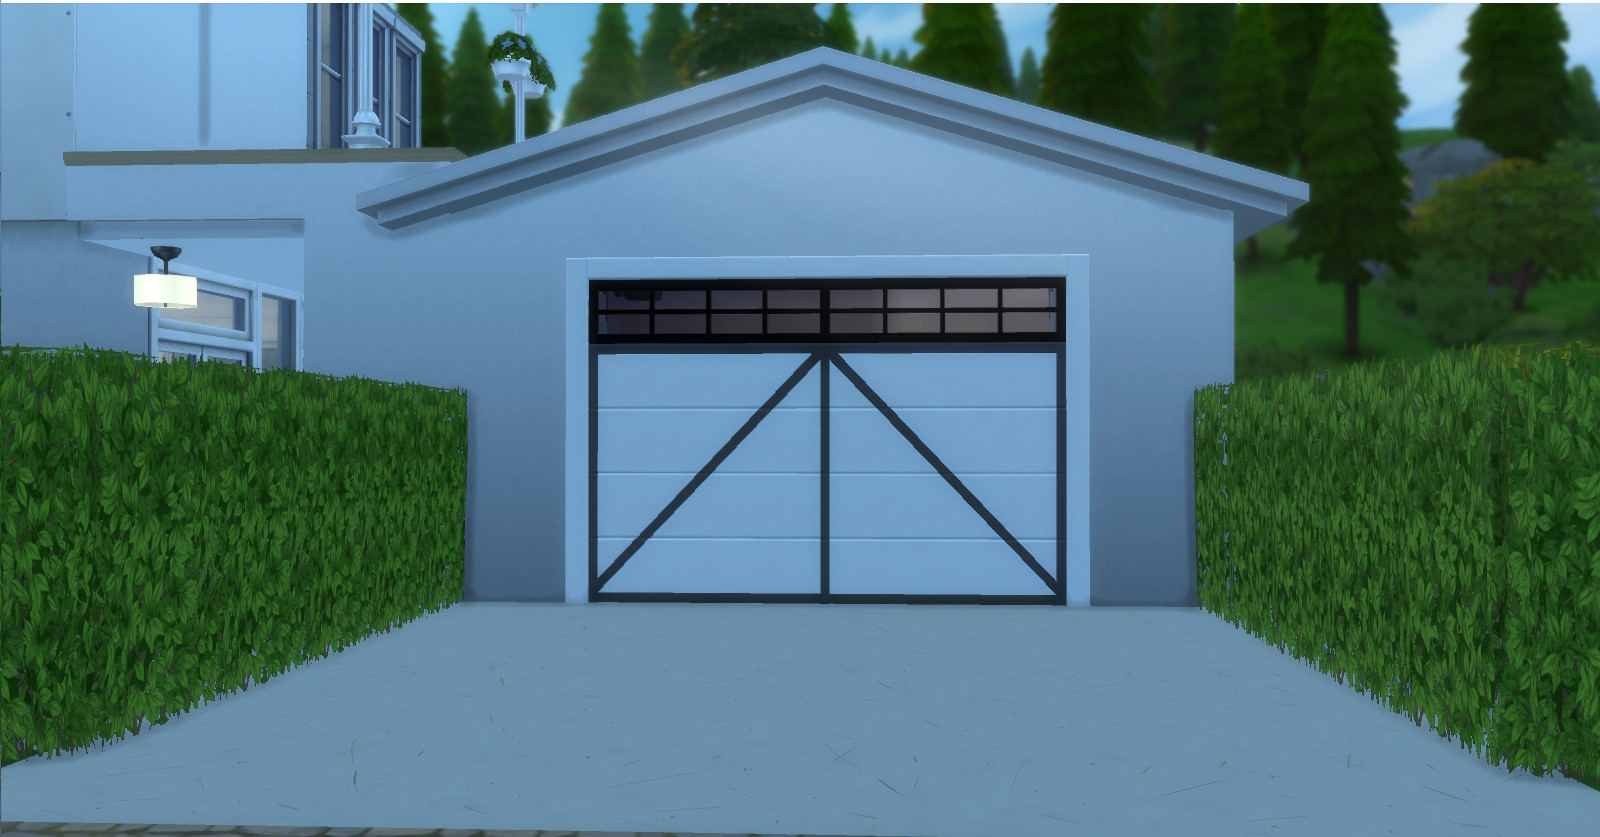 Sims 4 Garage Door
 Mod The Sims Garages